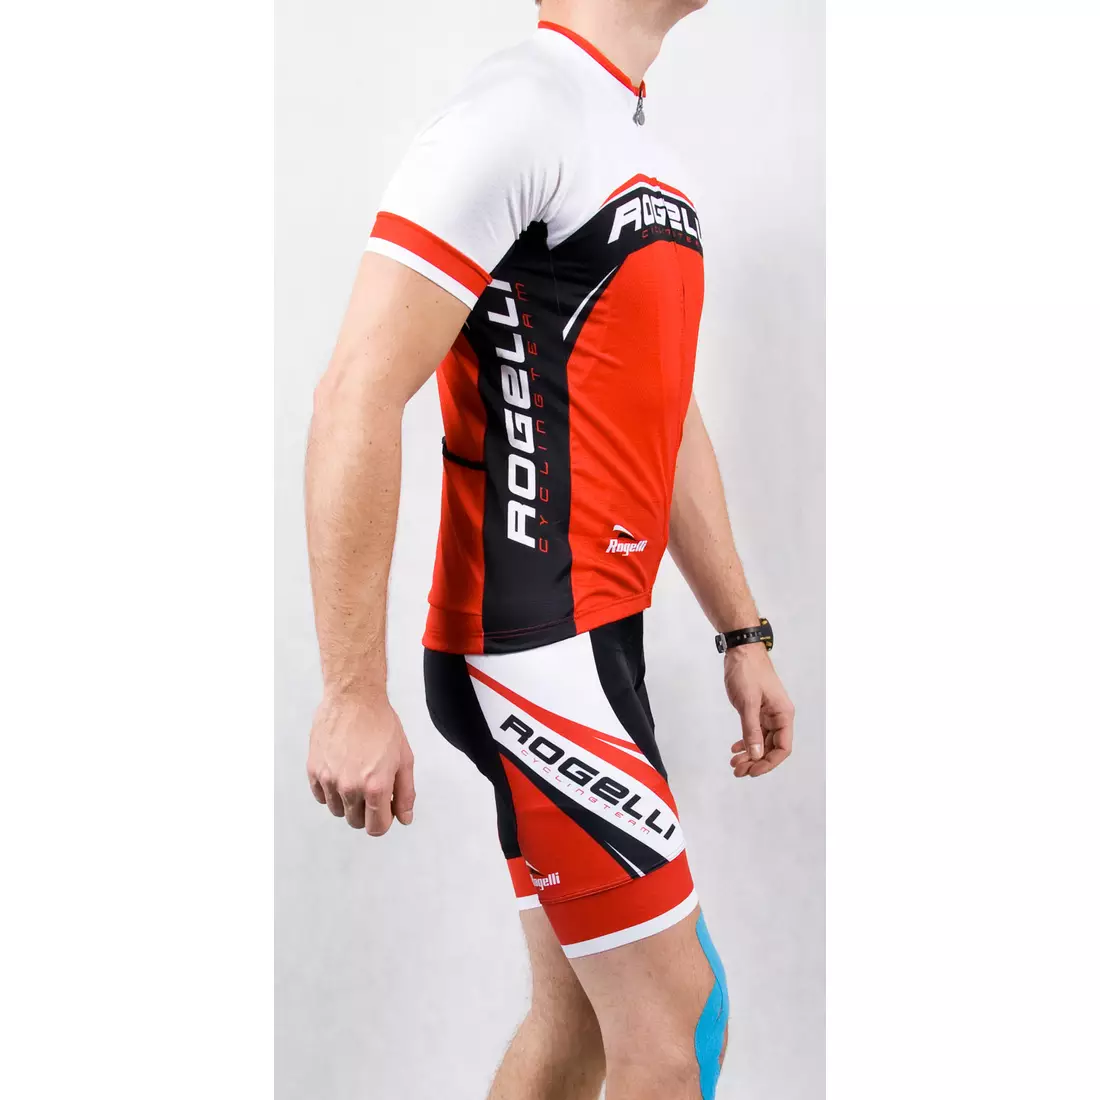 ROGELLI ANCONA - tricou de ciclism barbatesc, alb si rosu